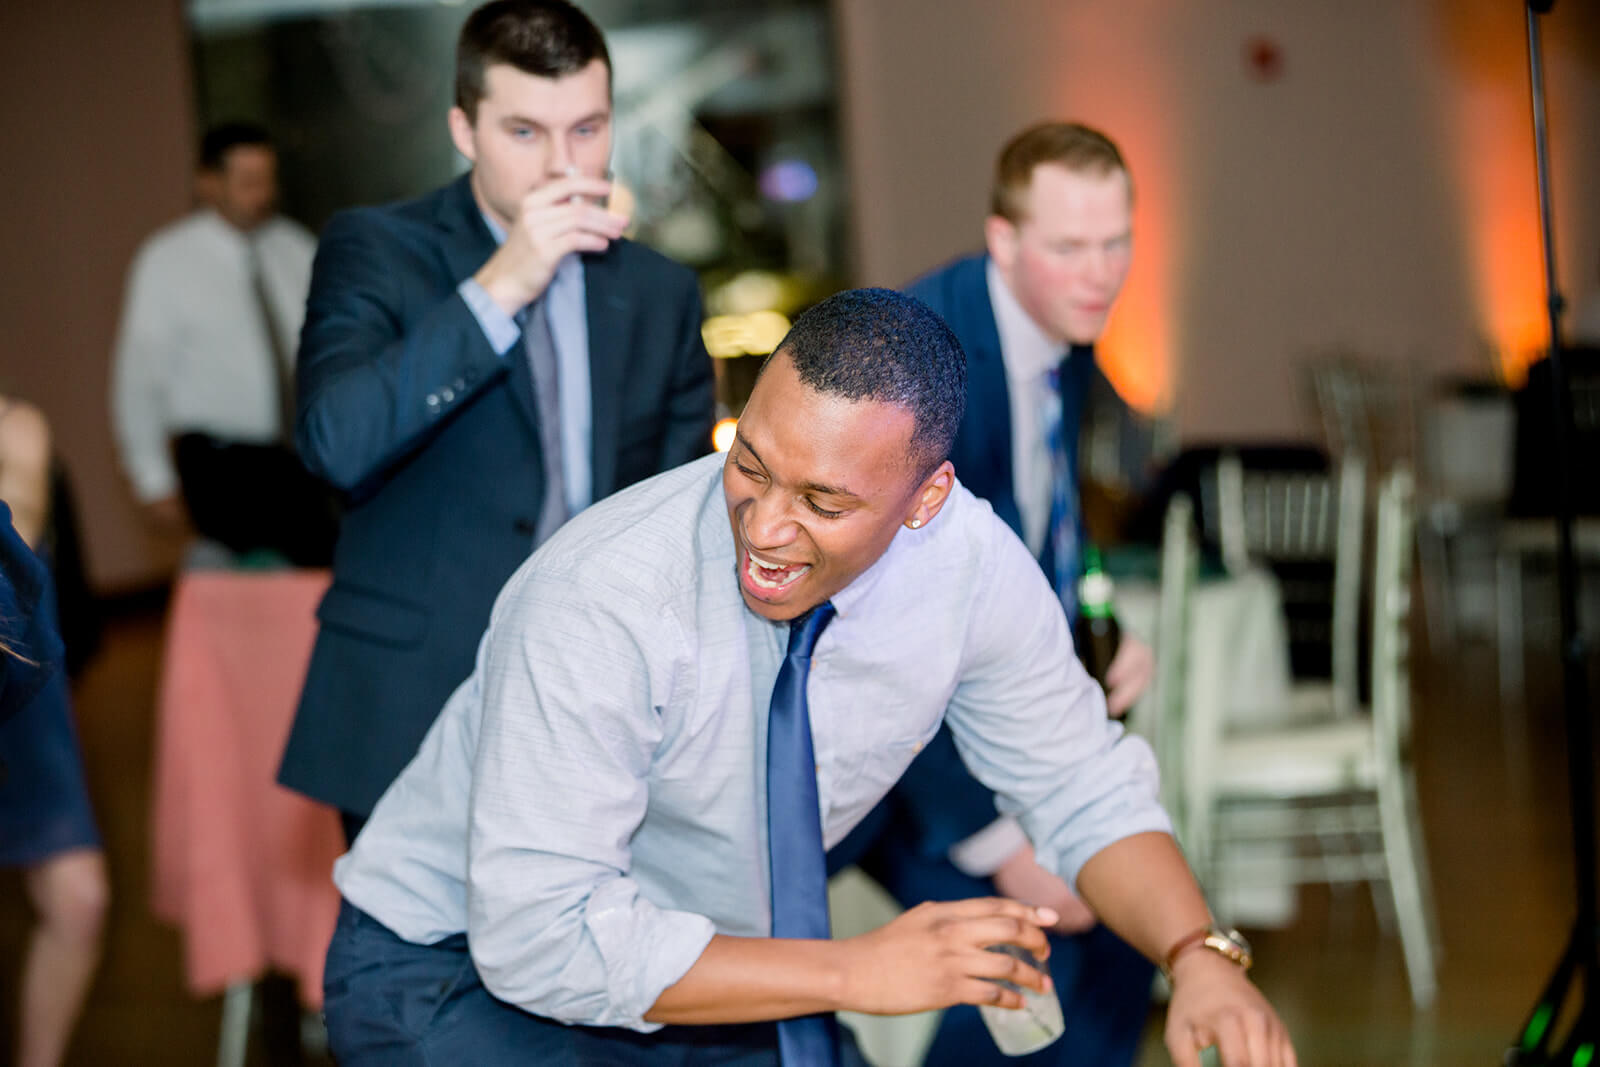 Cincinnati wedding DJs entertaining a group of men at a wedding reception.